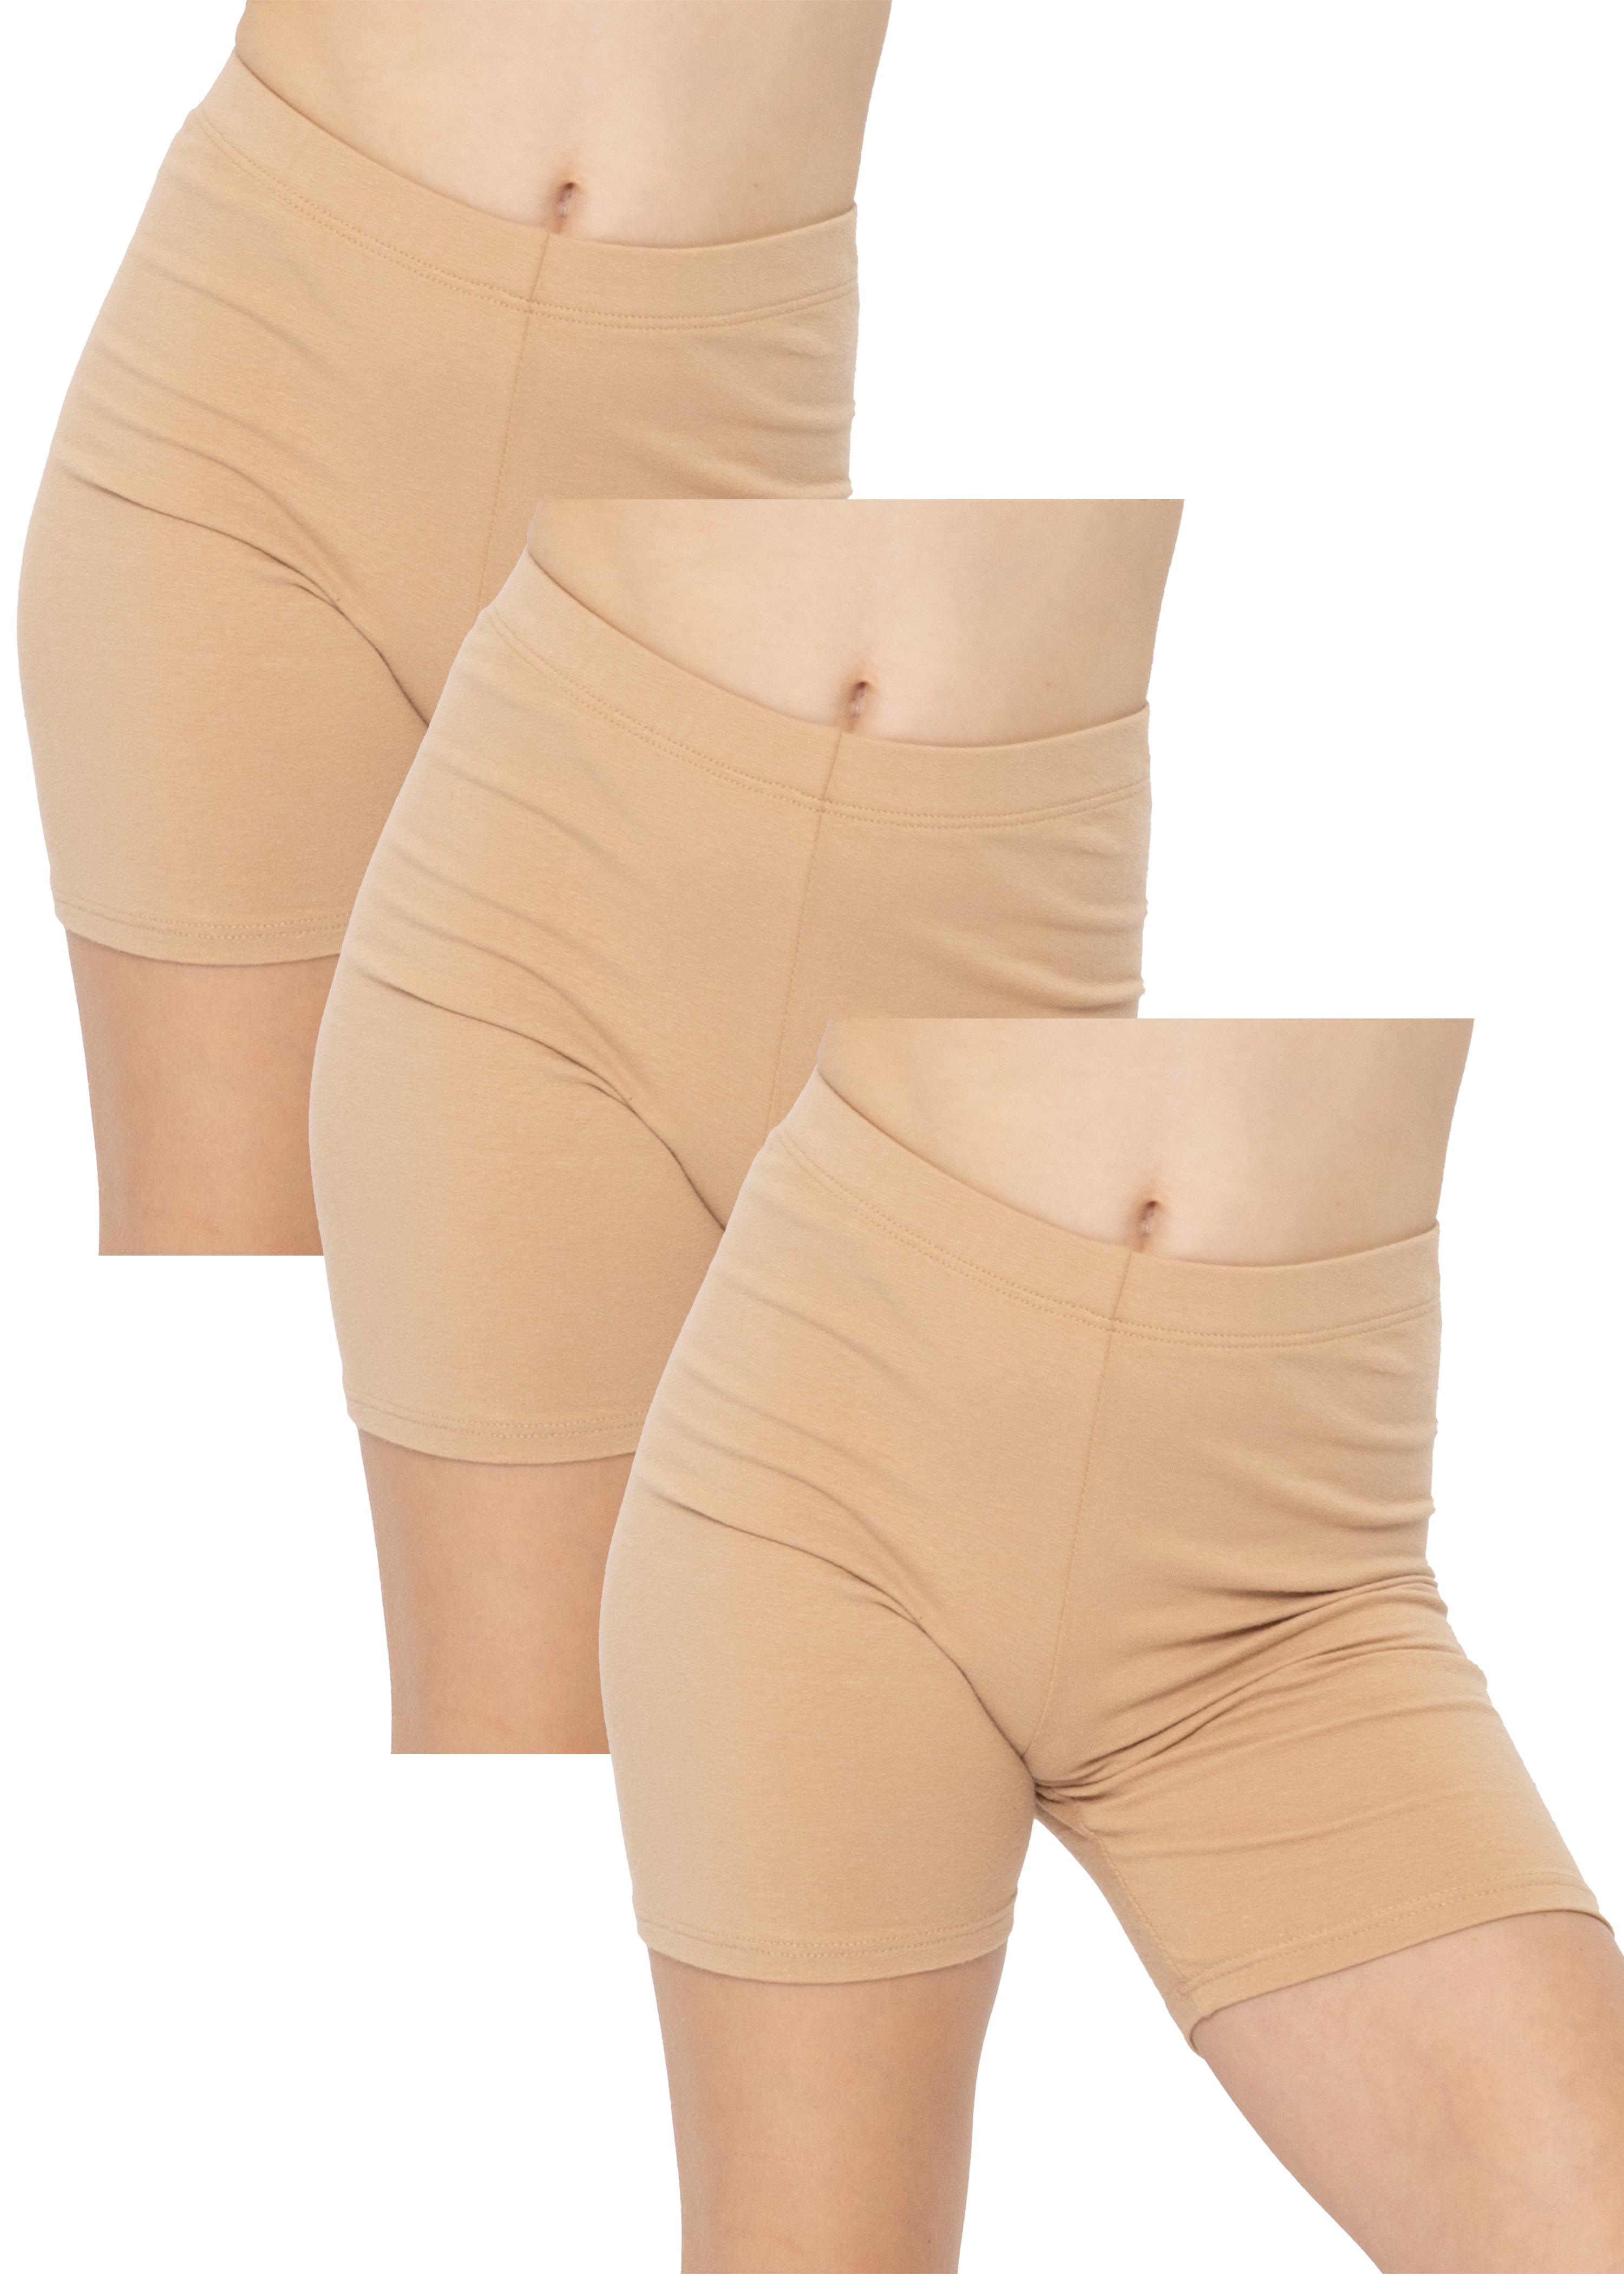 STRETCH IS COMFORT Girl's Cotton Biker Shorts | 3 Pack | Size 4-16 -  Walmart.com